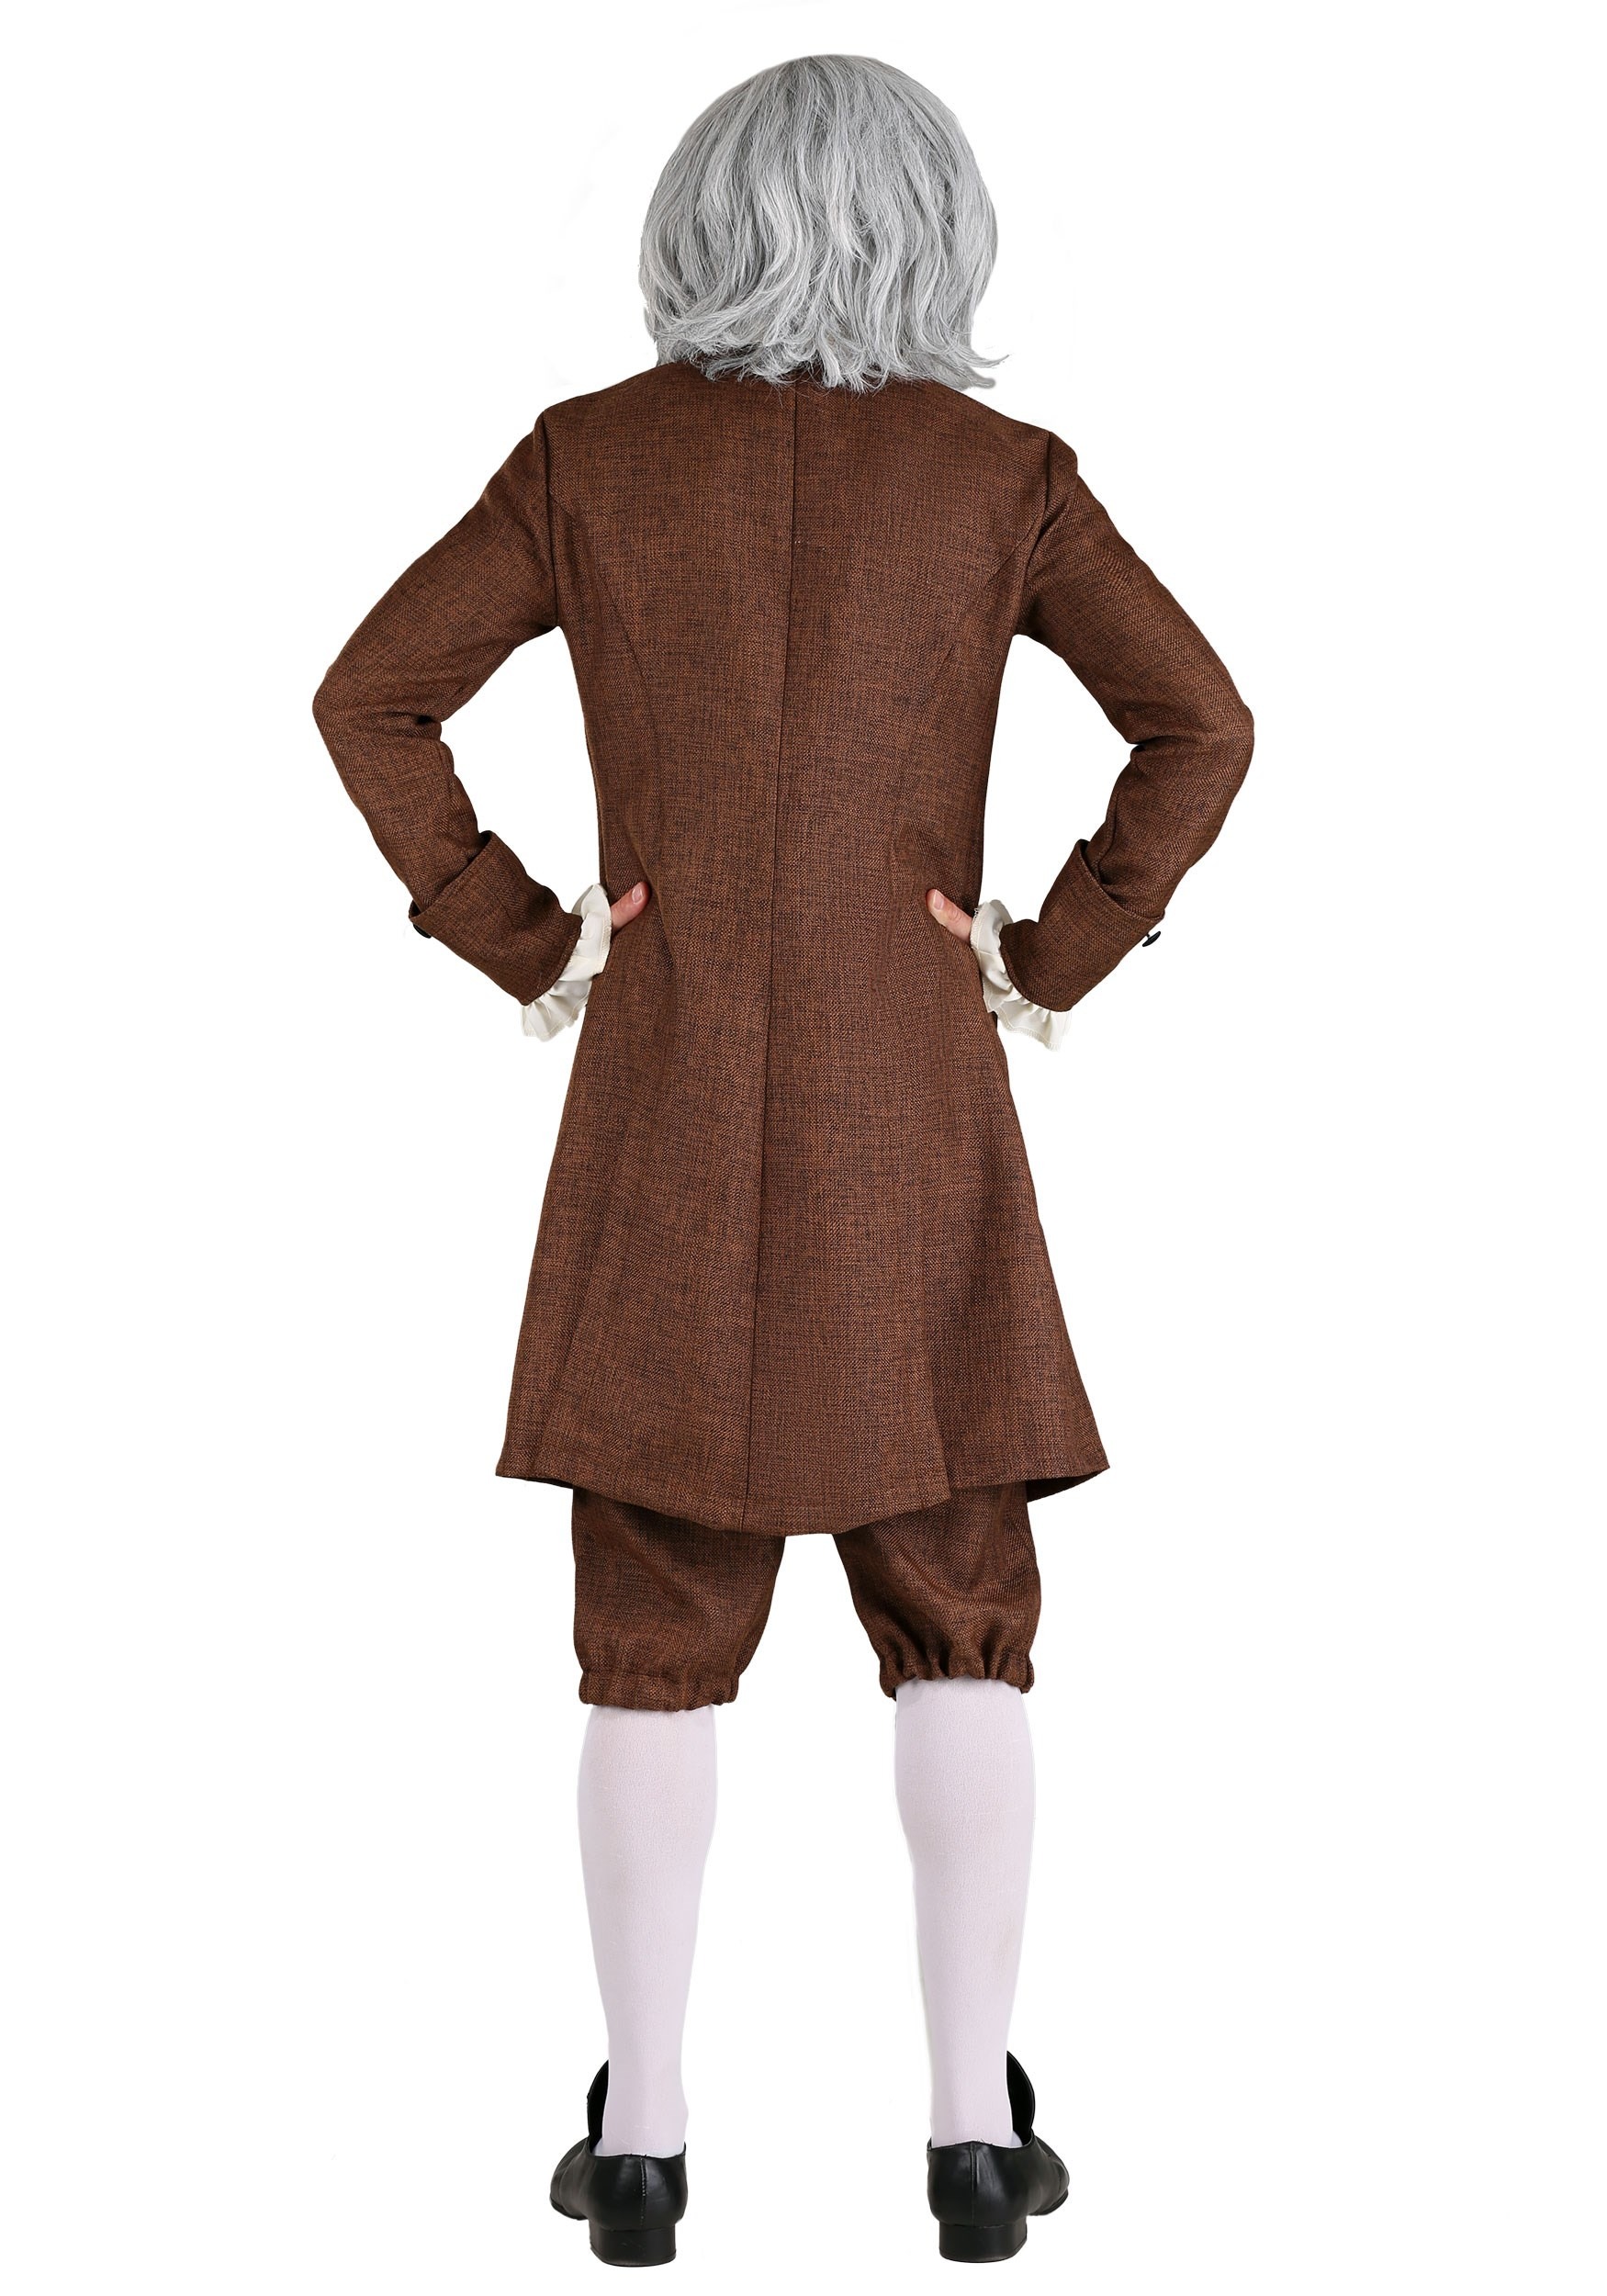 Plus Size Colonial Benjamin Franklin Costume For Men